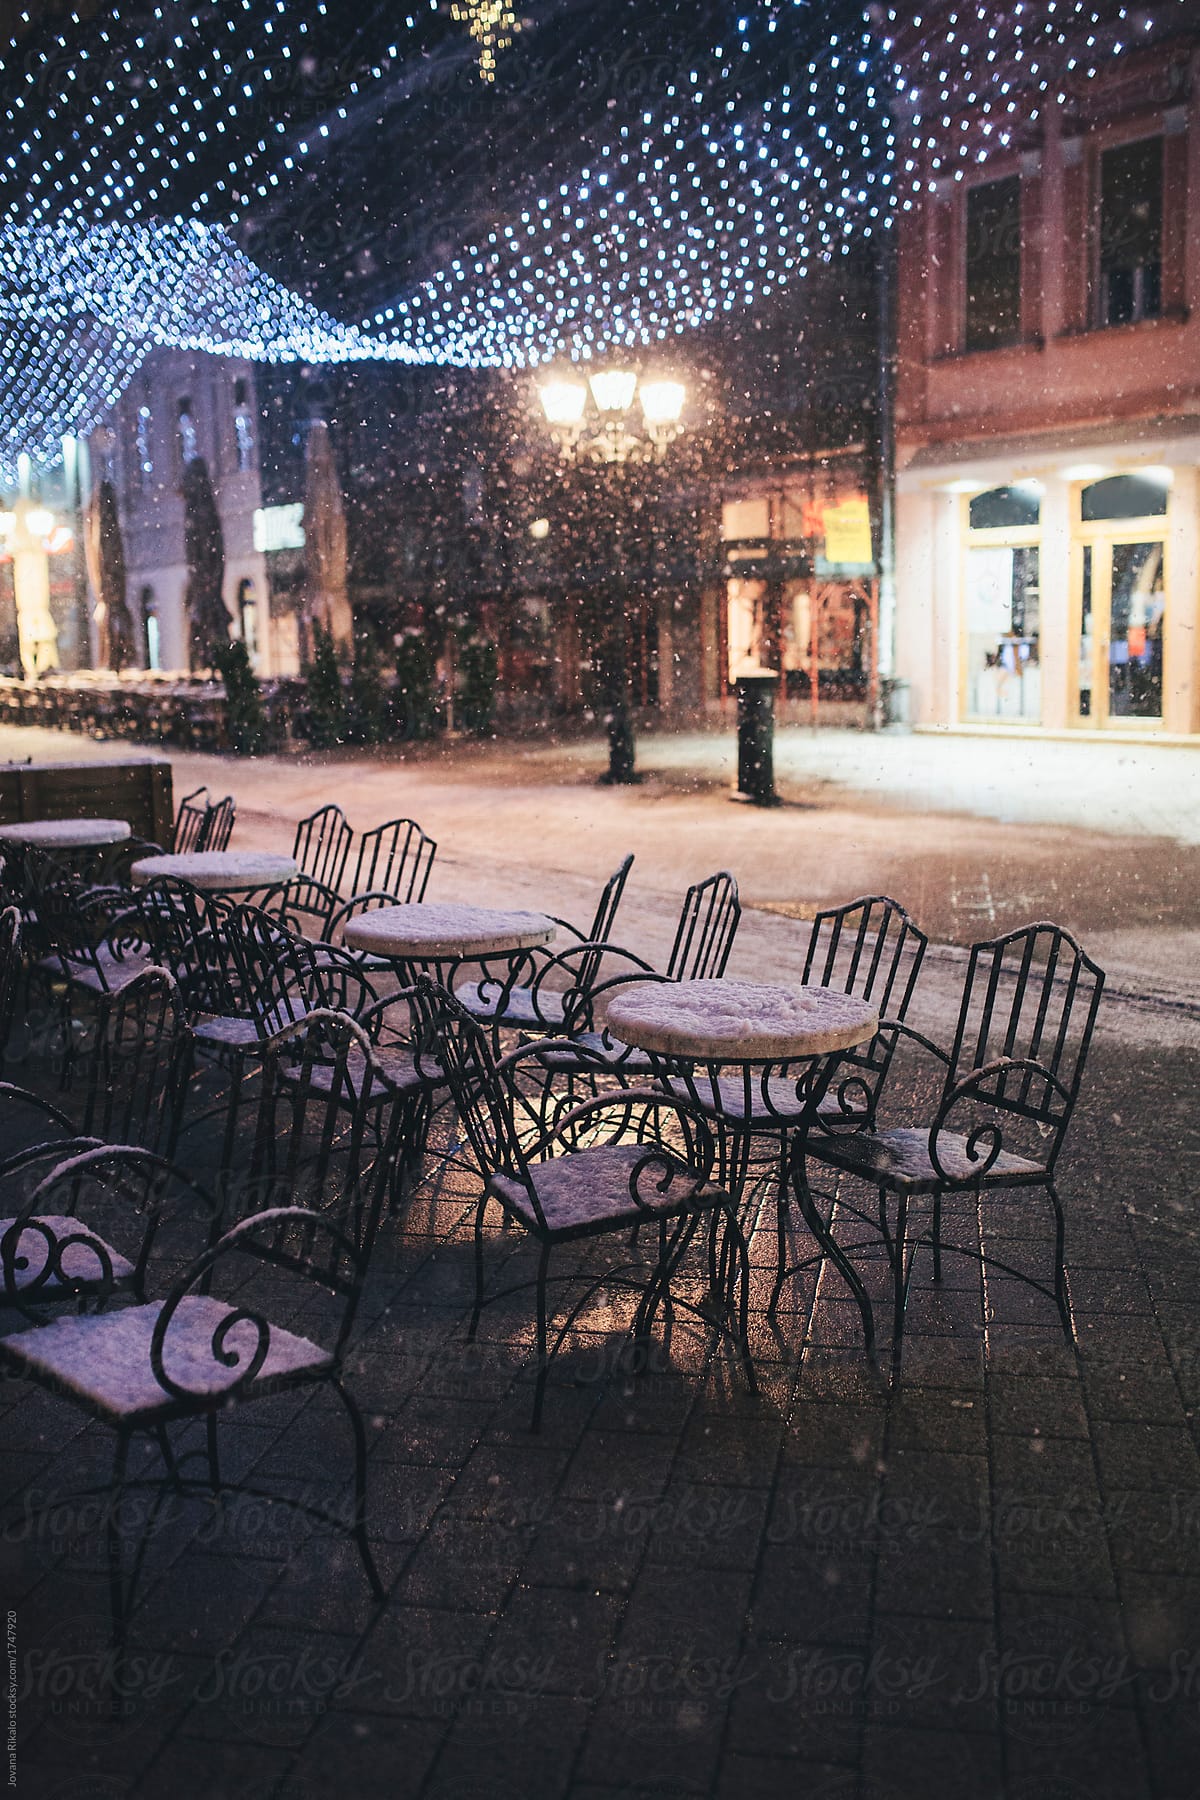 First snow in Novi Sad city at night